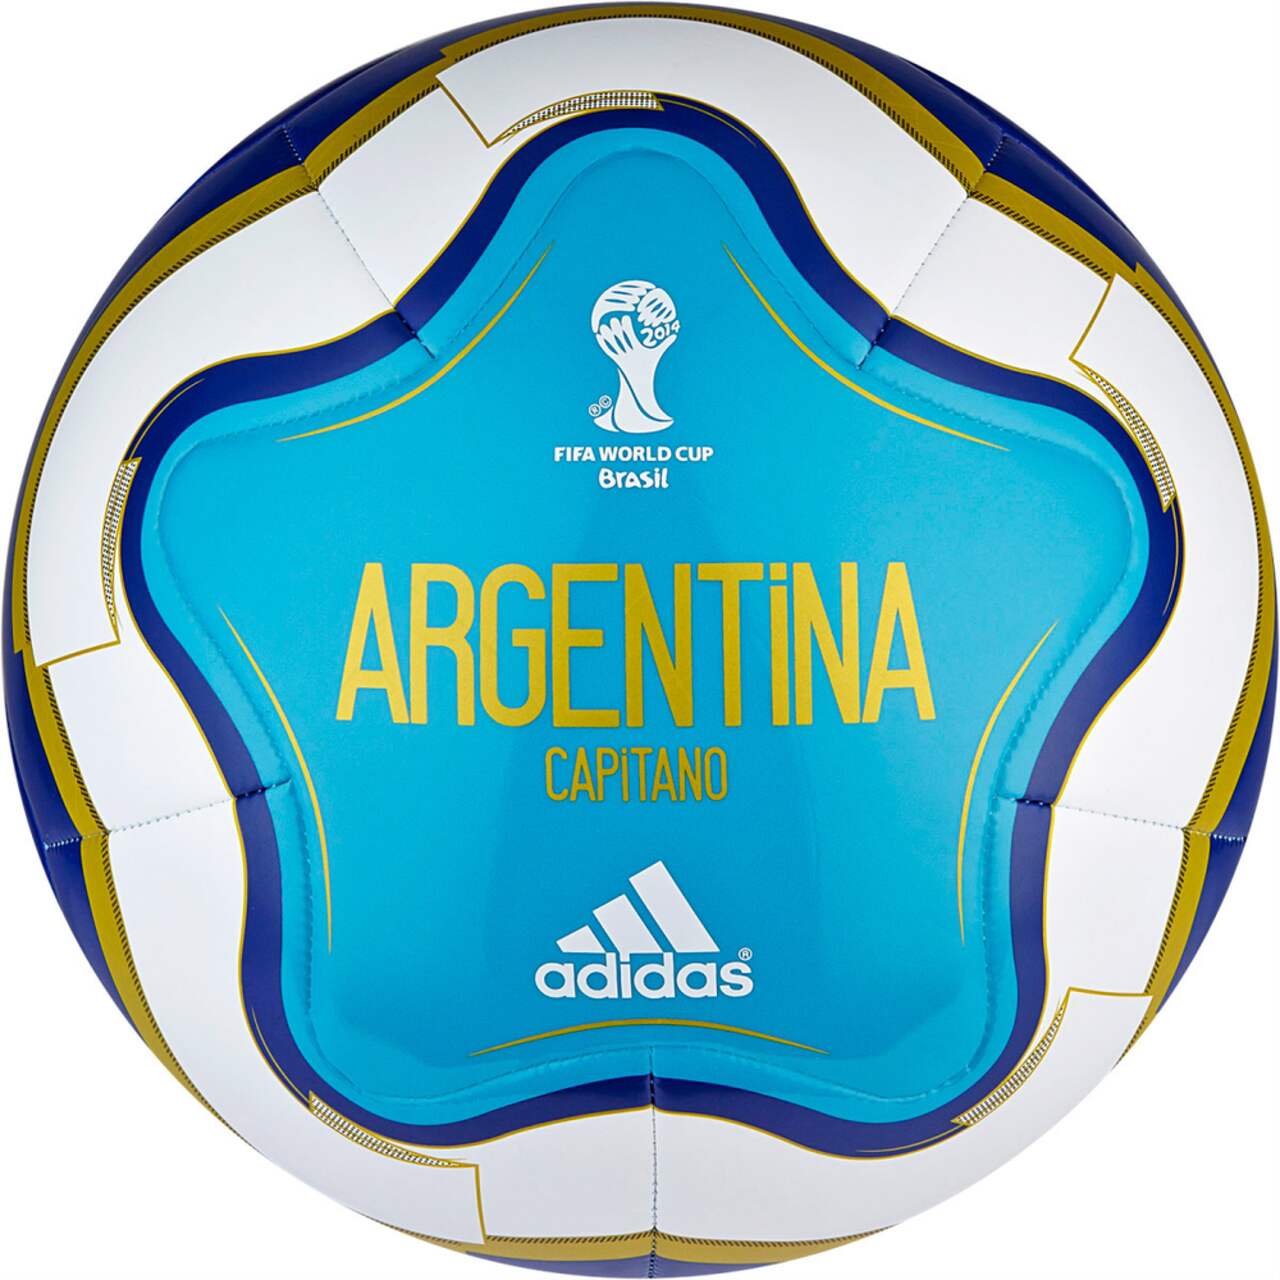 ADIDAS BRAZUCA | FIFA World Cup 2014 Brazil | Soccer ball Football | Size 5